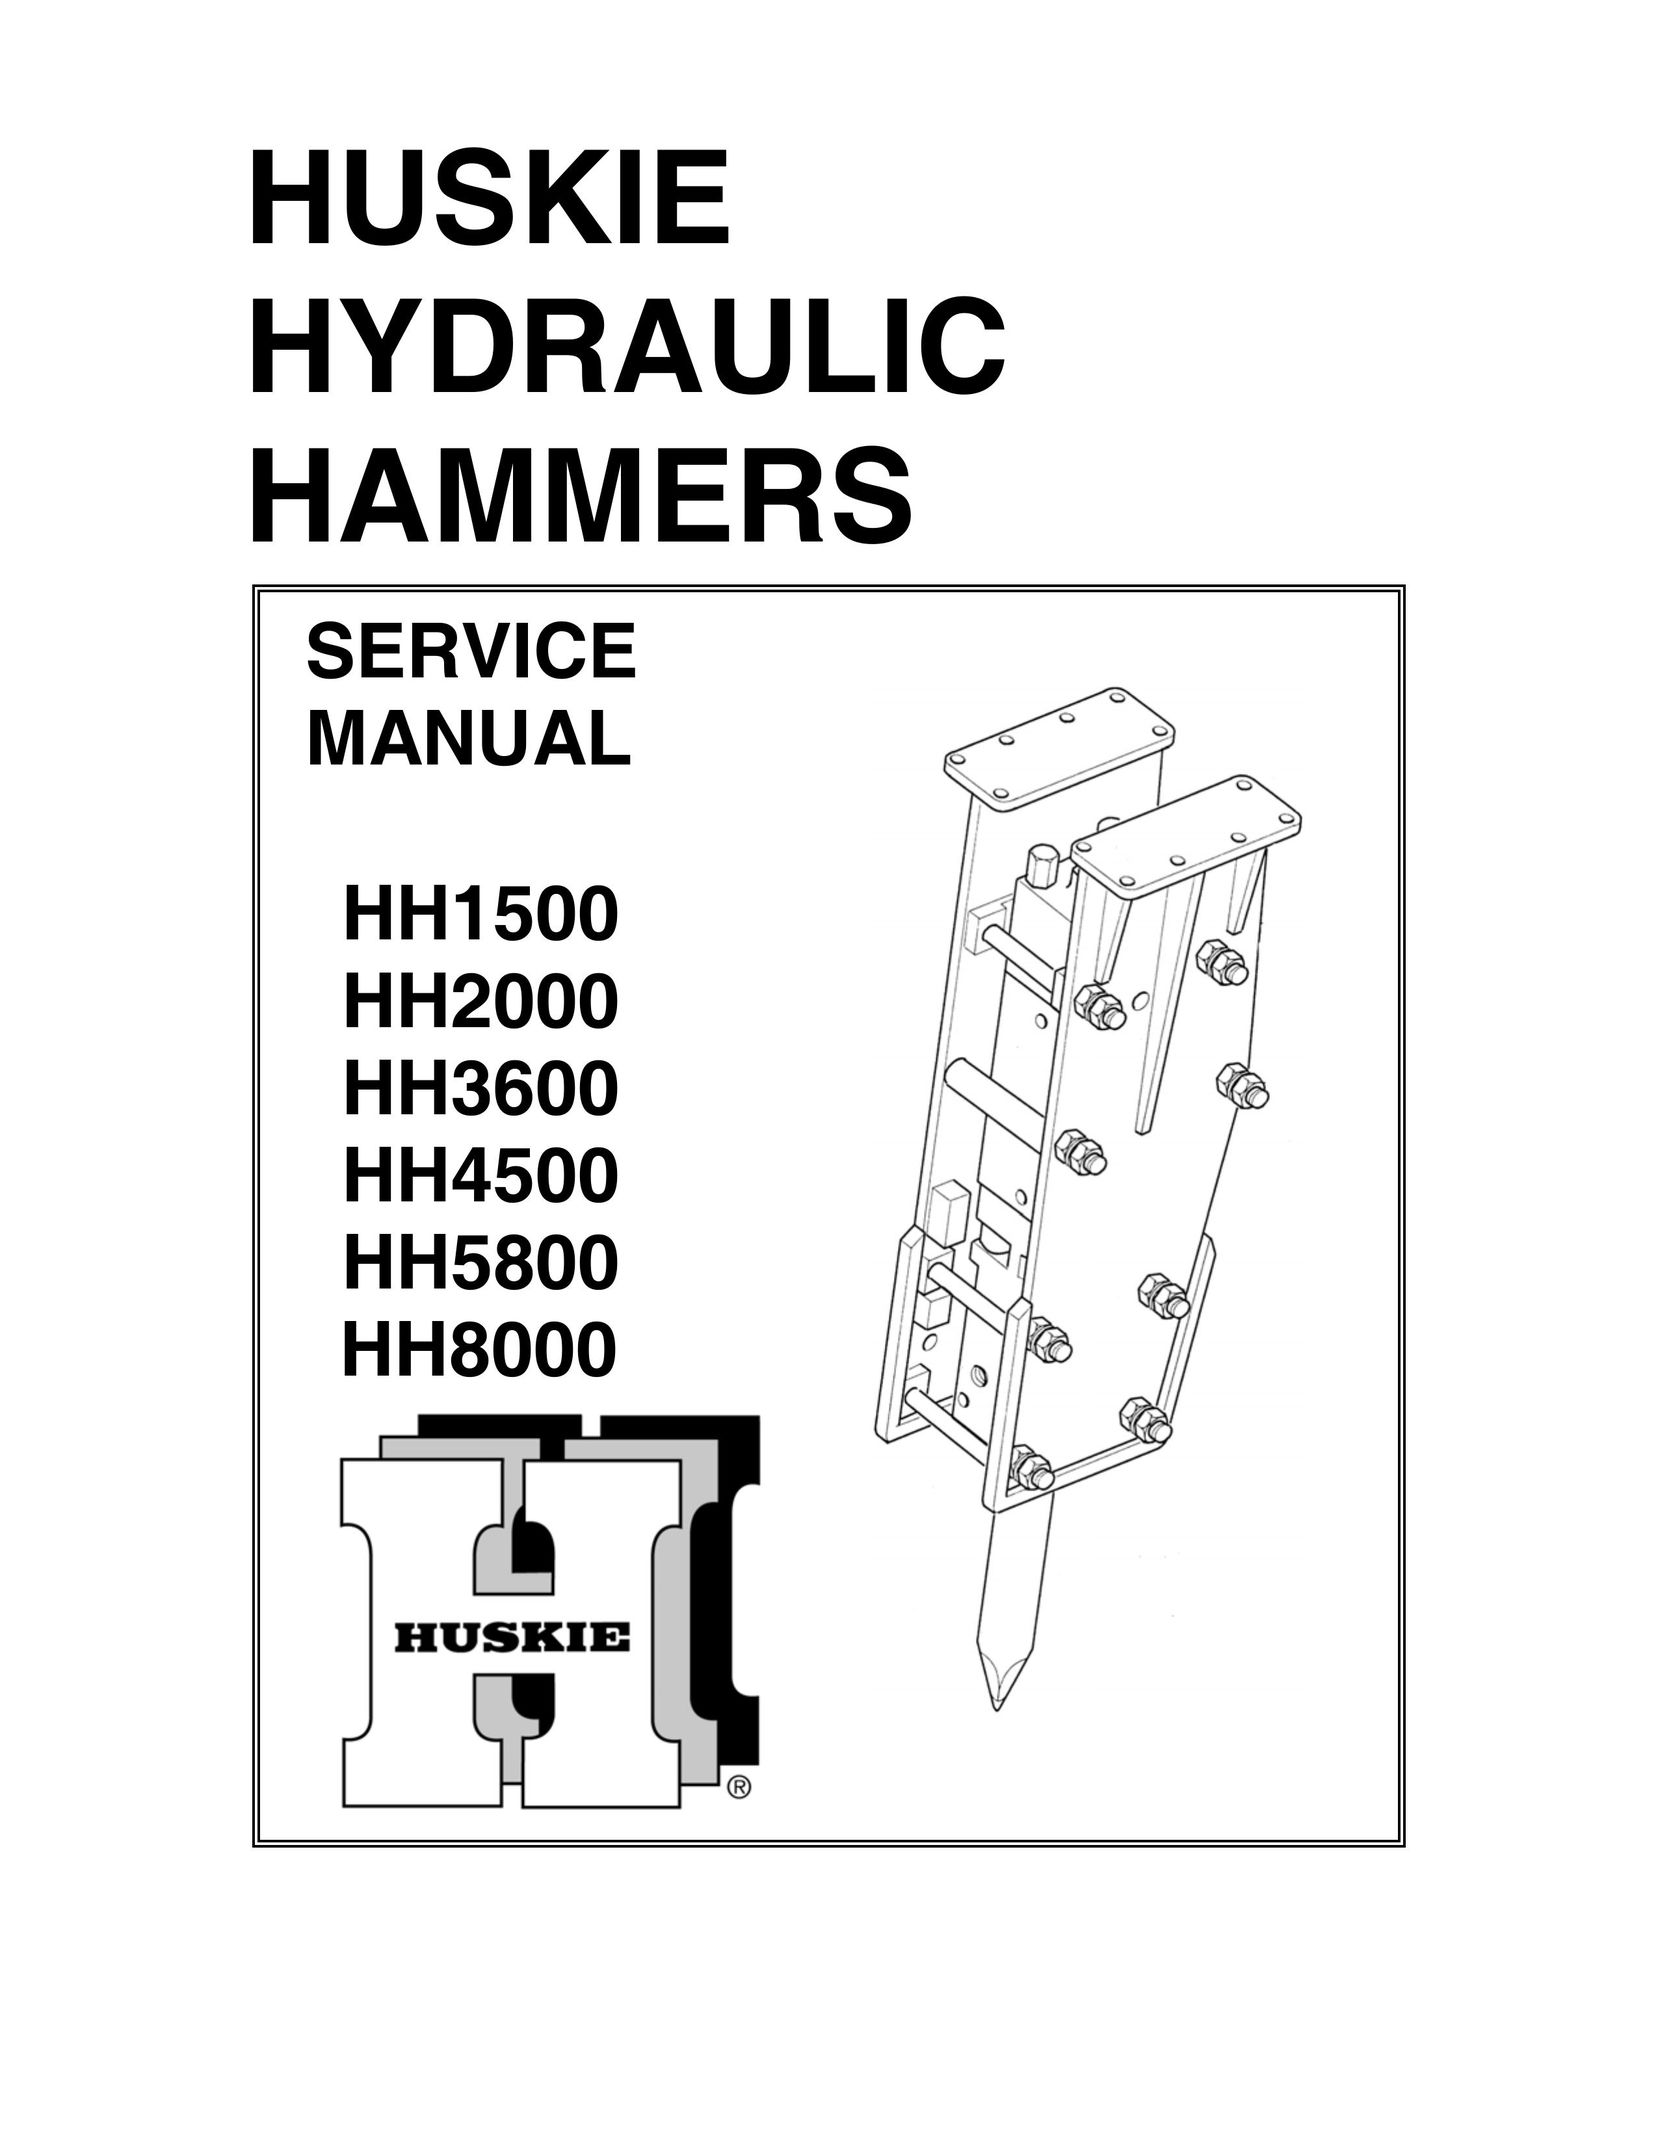 Huskee HH3600 Cordless Drill User Manual